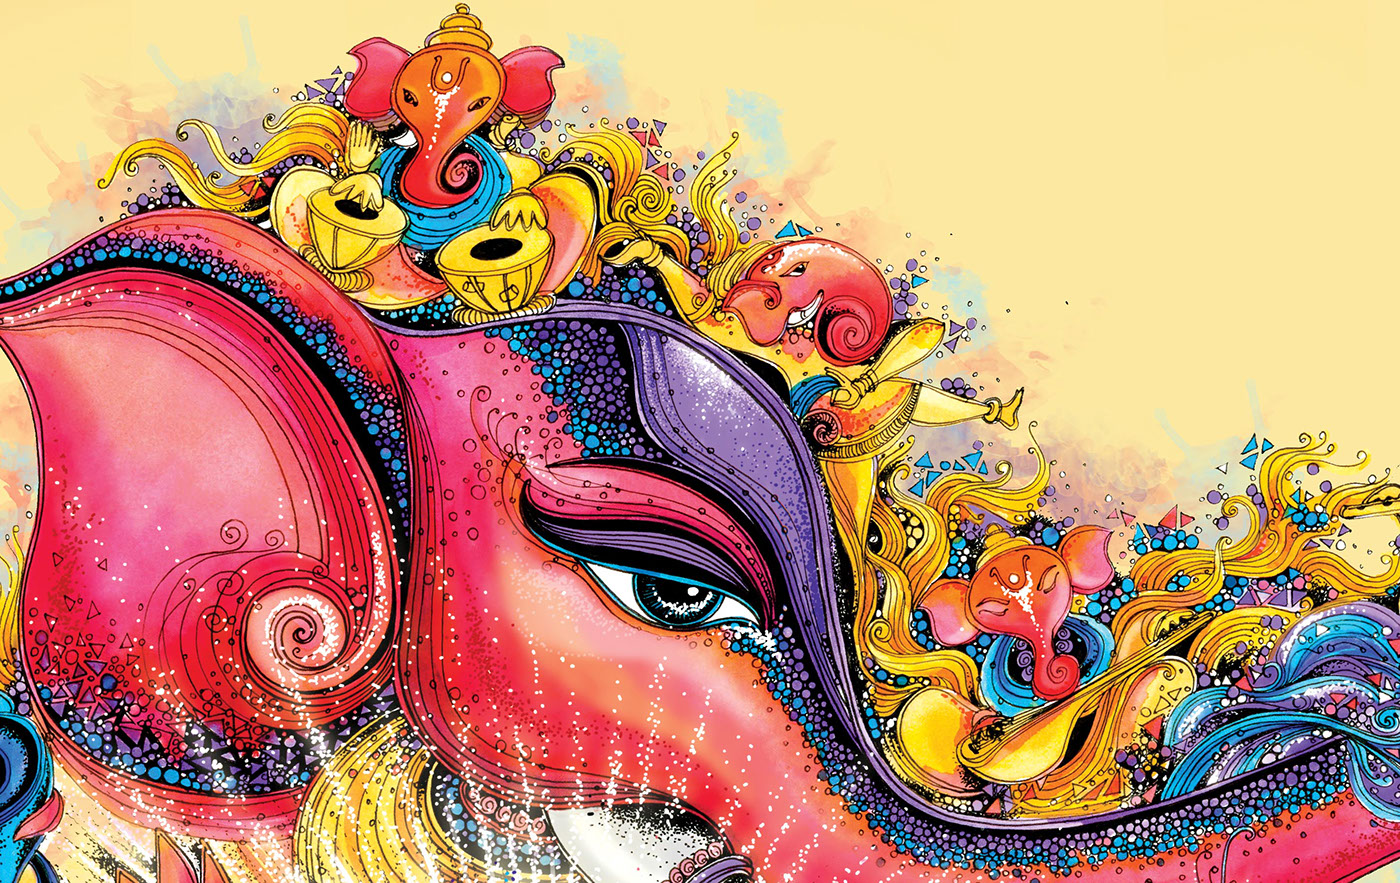 ILLUSTRATION  ganesh festival indian gods artforms handdrawn illustration Hinduism